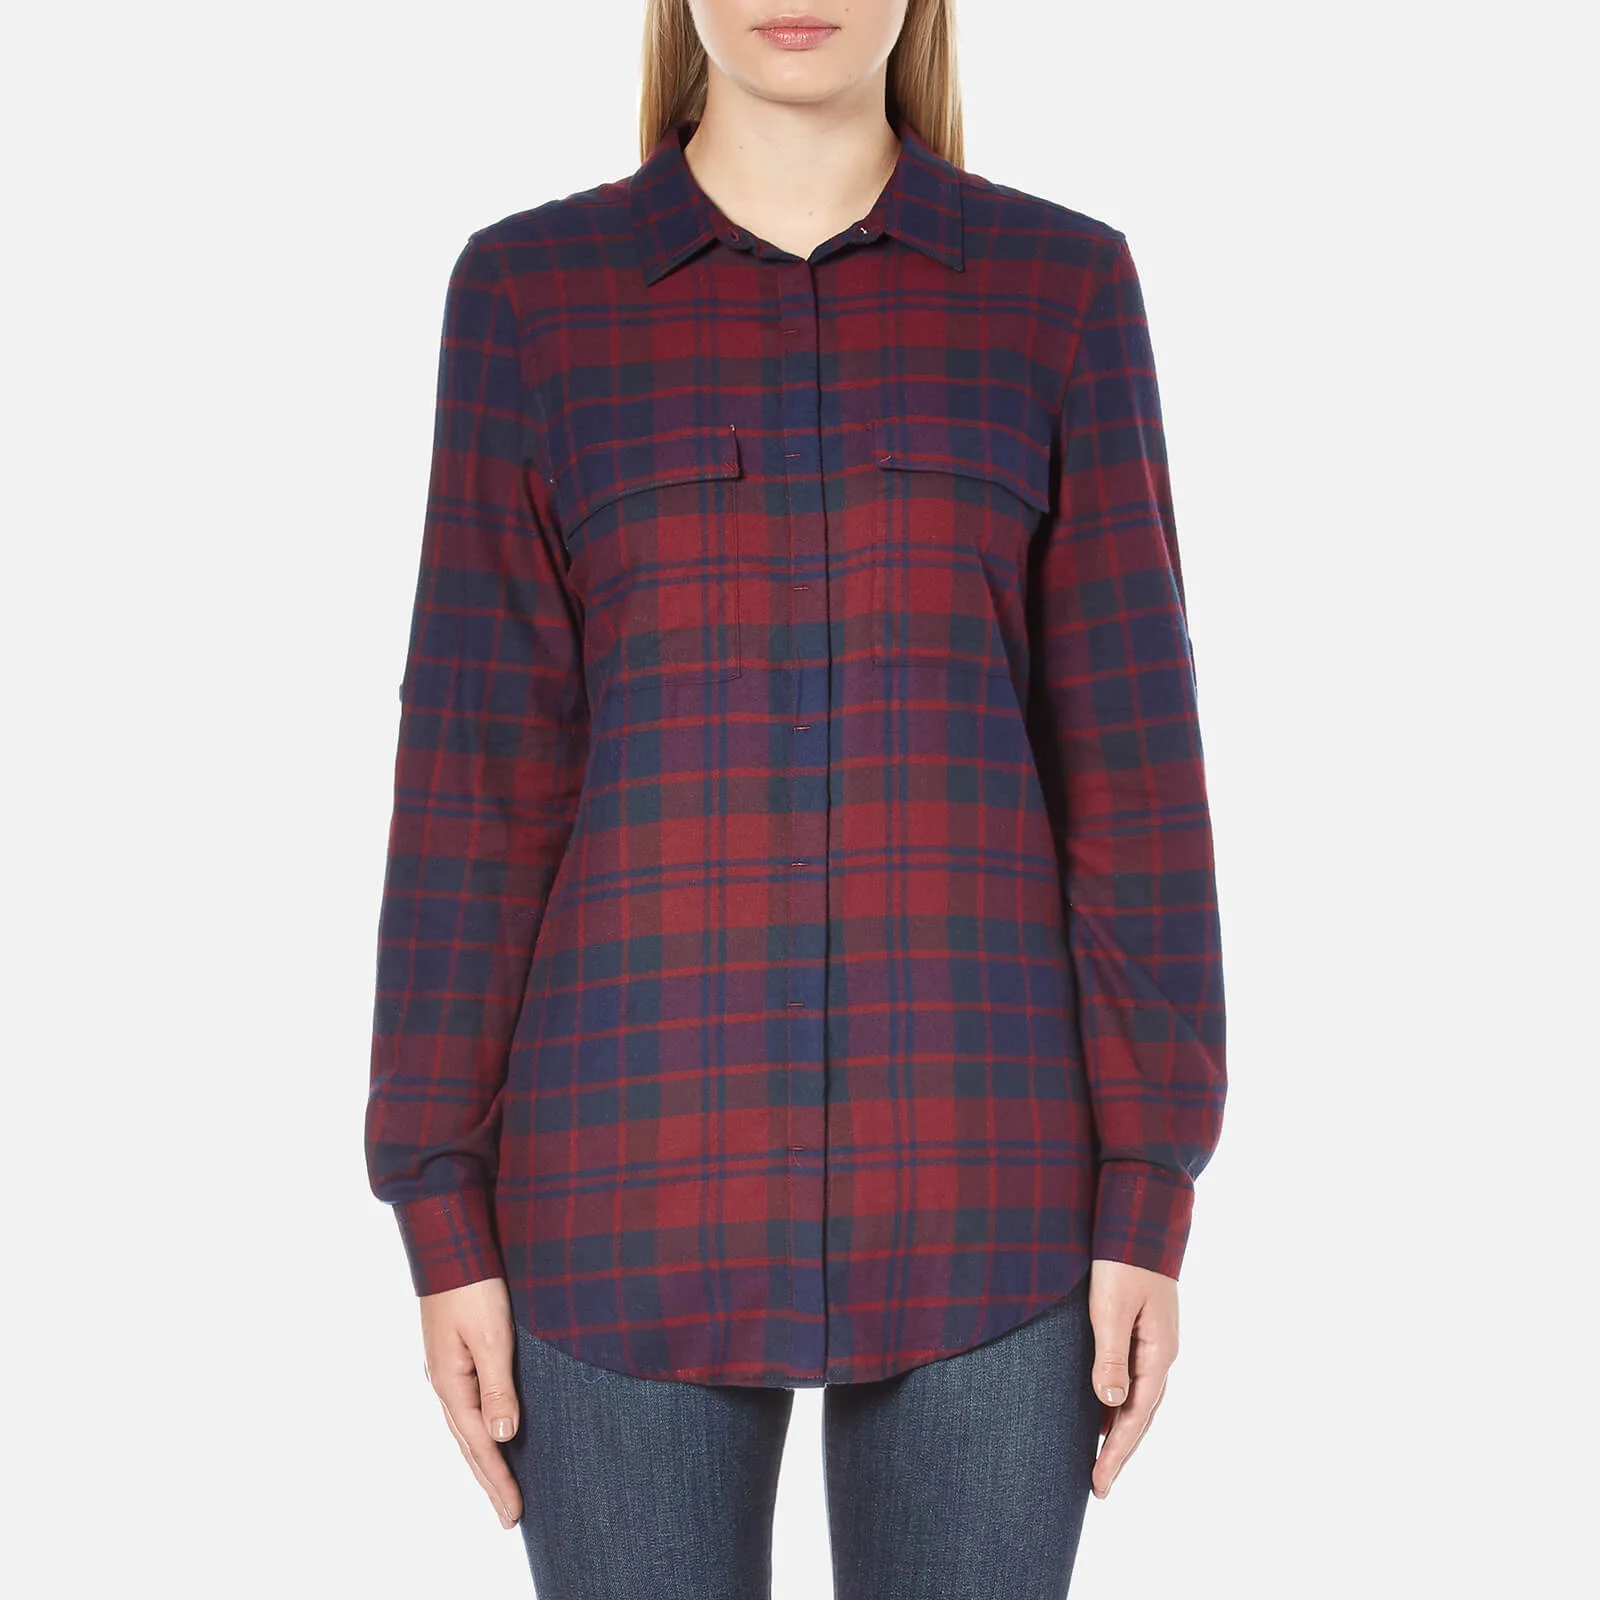 Barbour Women's Highland Shirt - Merlot Image 1